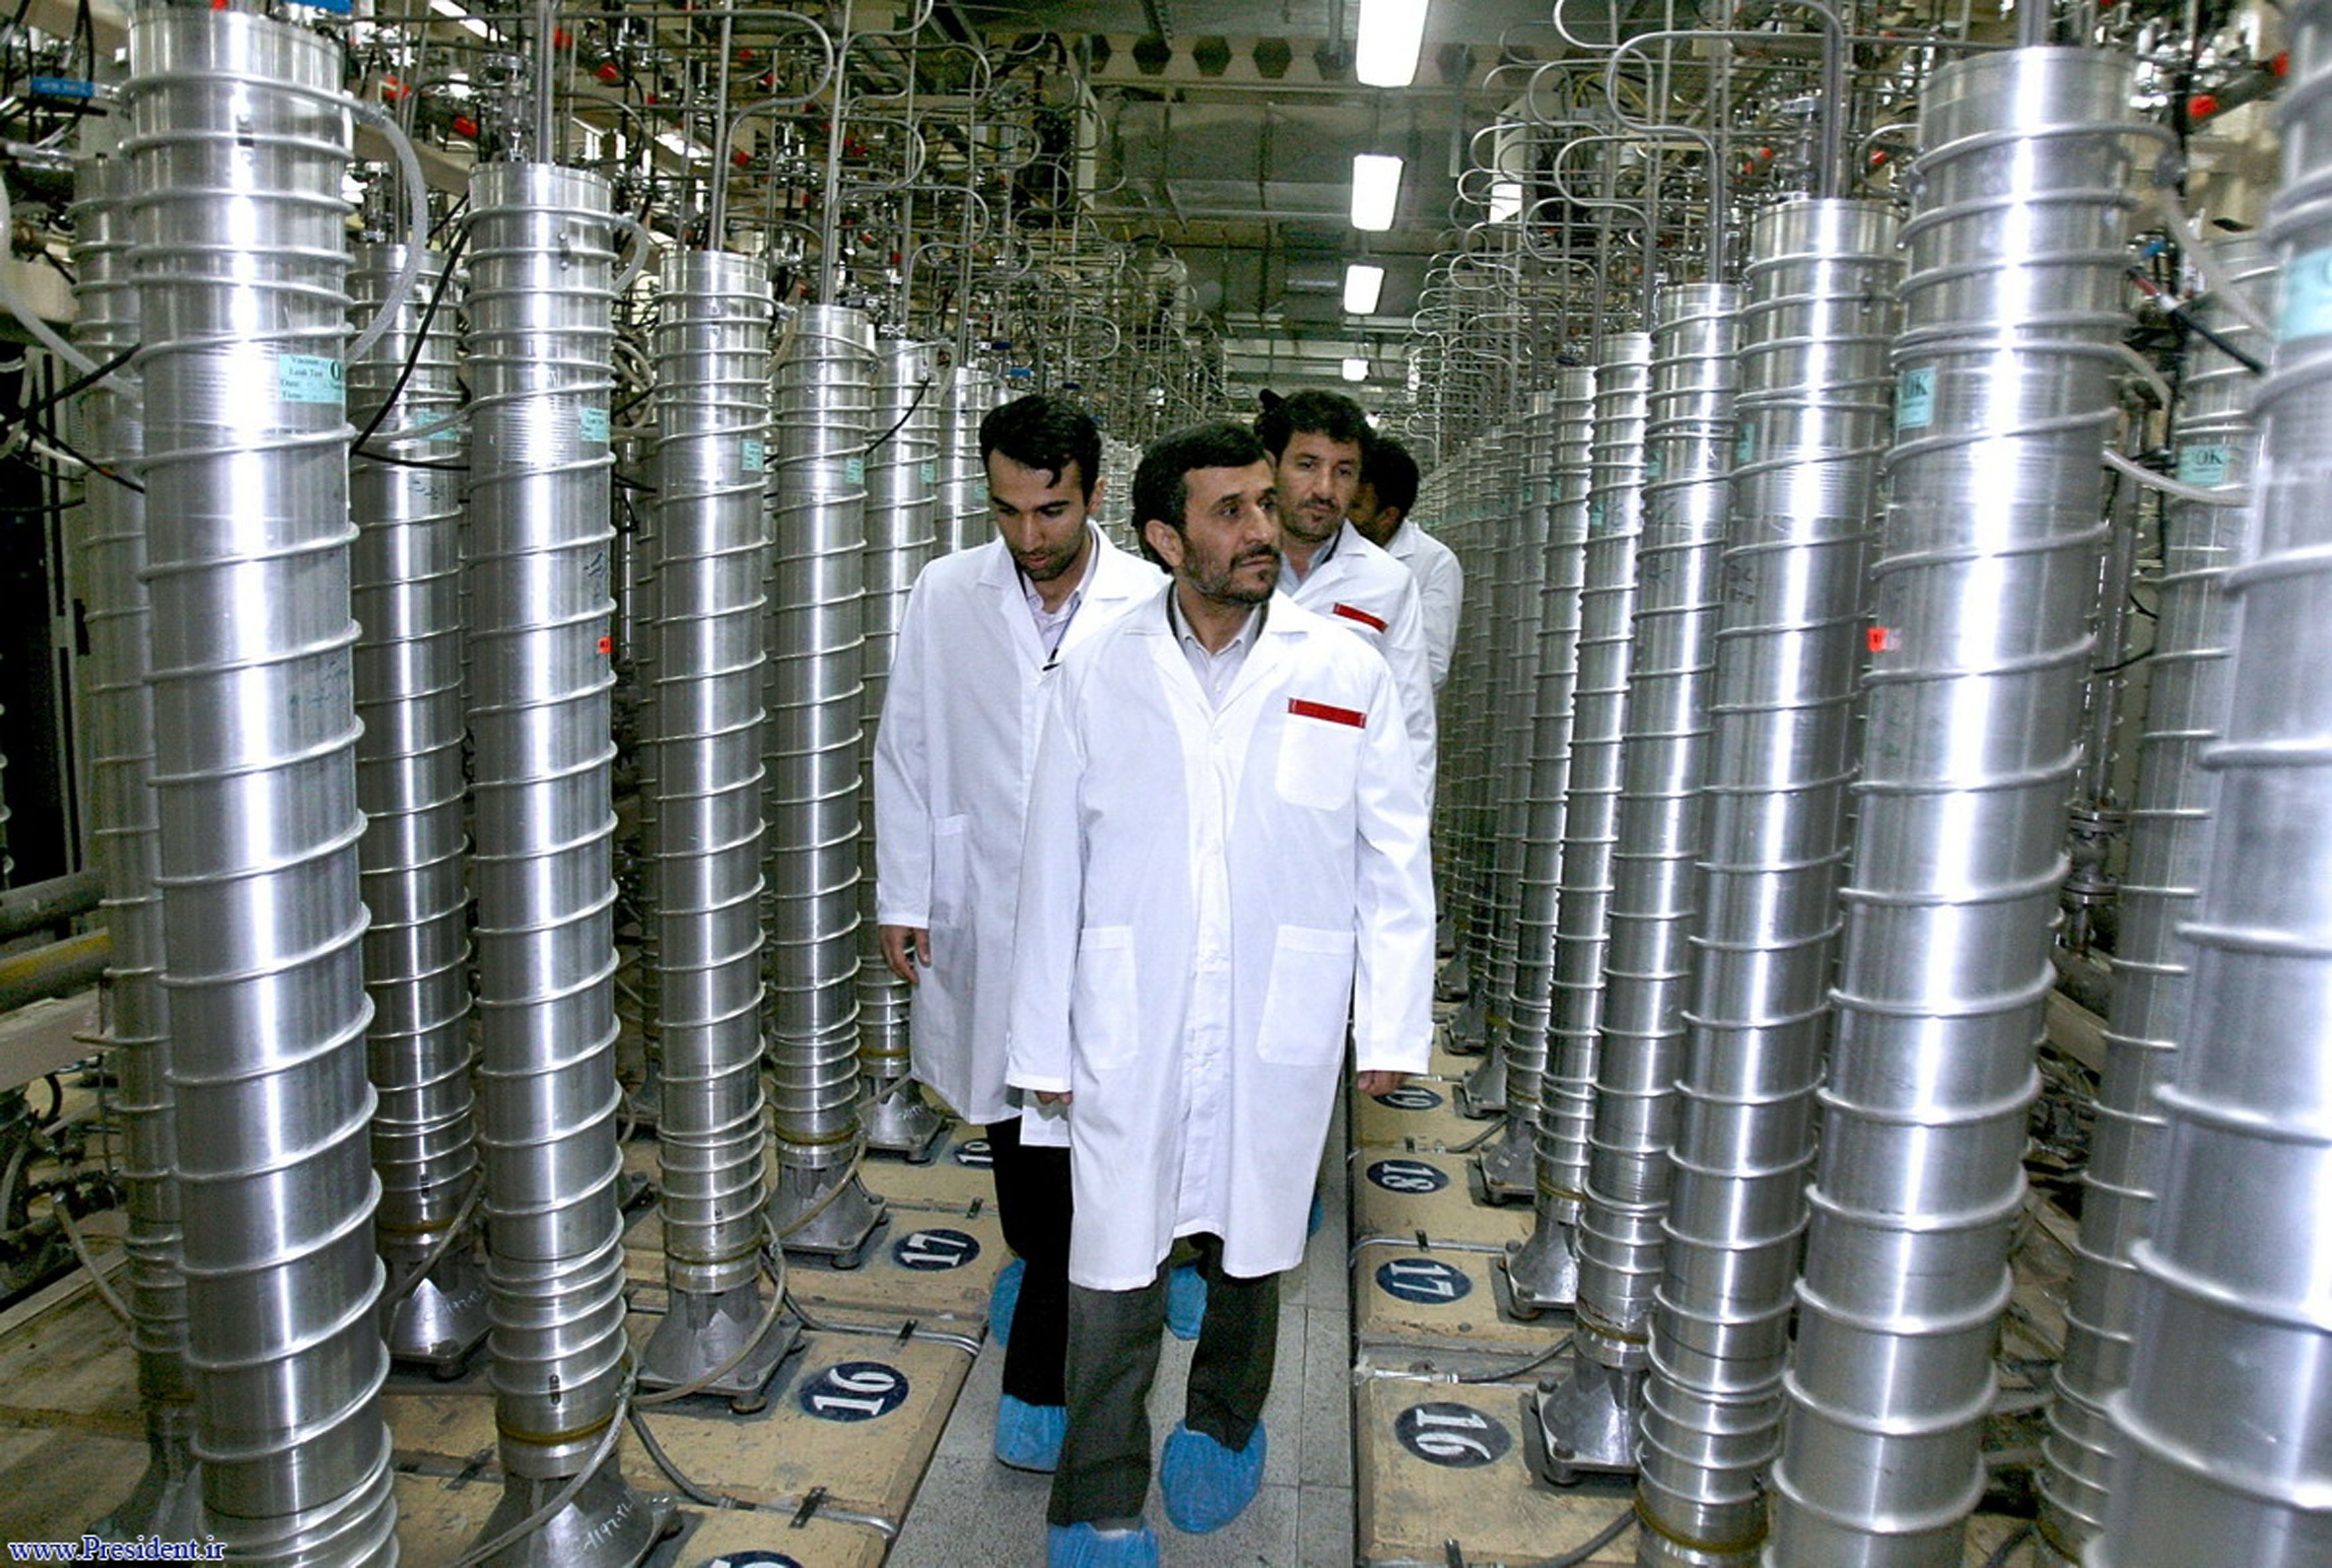 Mahmoud Ahmadinejad, Forskning, Atombomb, Uran, Iran, Kärnkraft